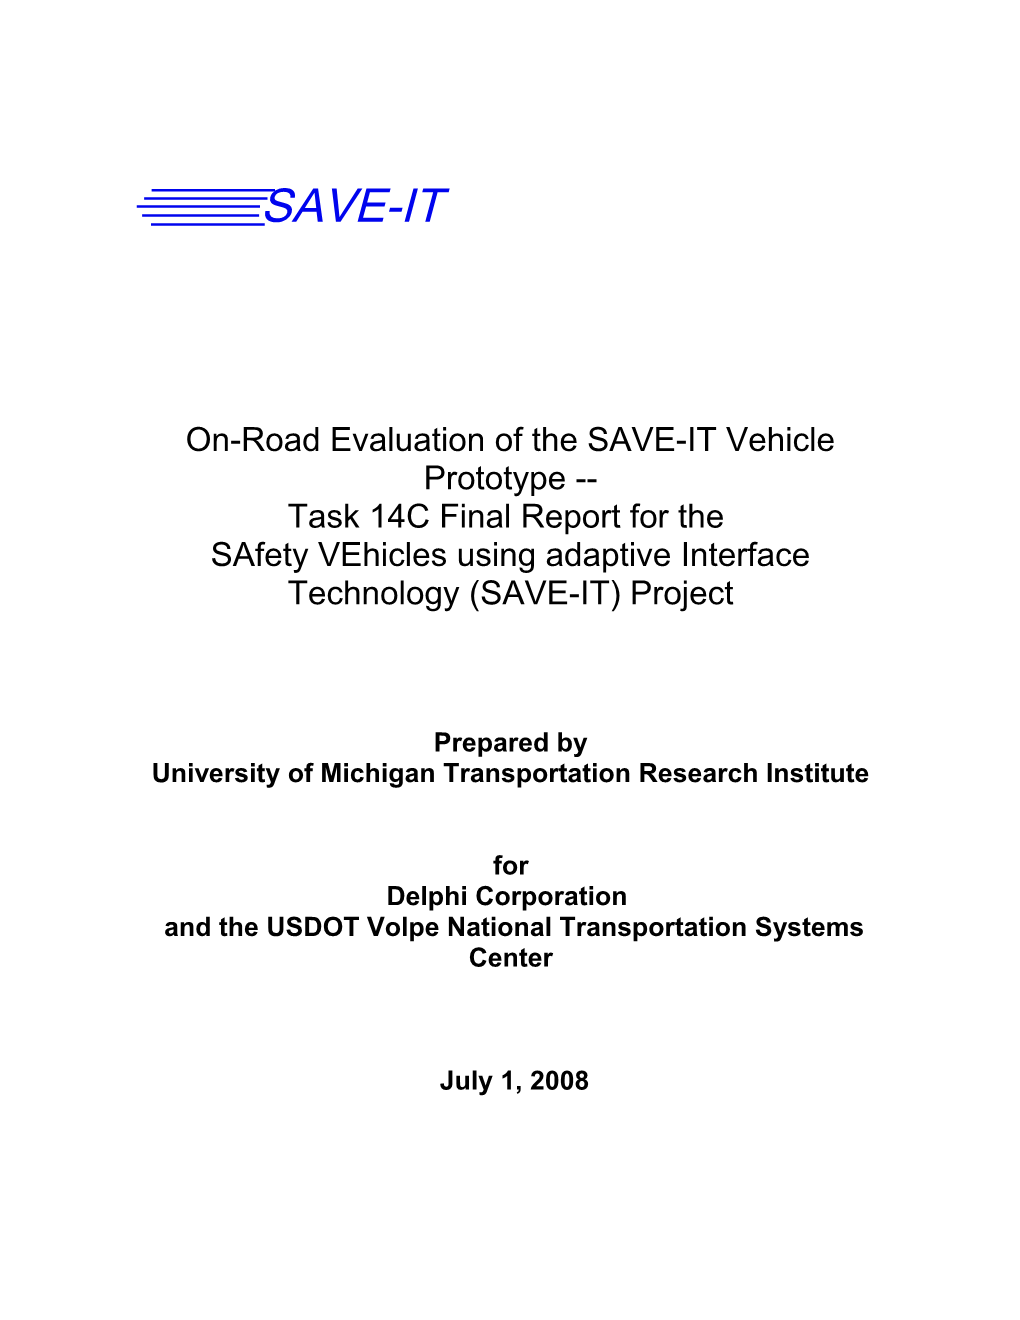 On-Road Evaluation Ofthe SAVE-IT Vehicle Prototype